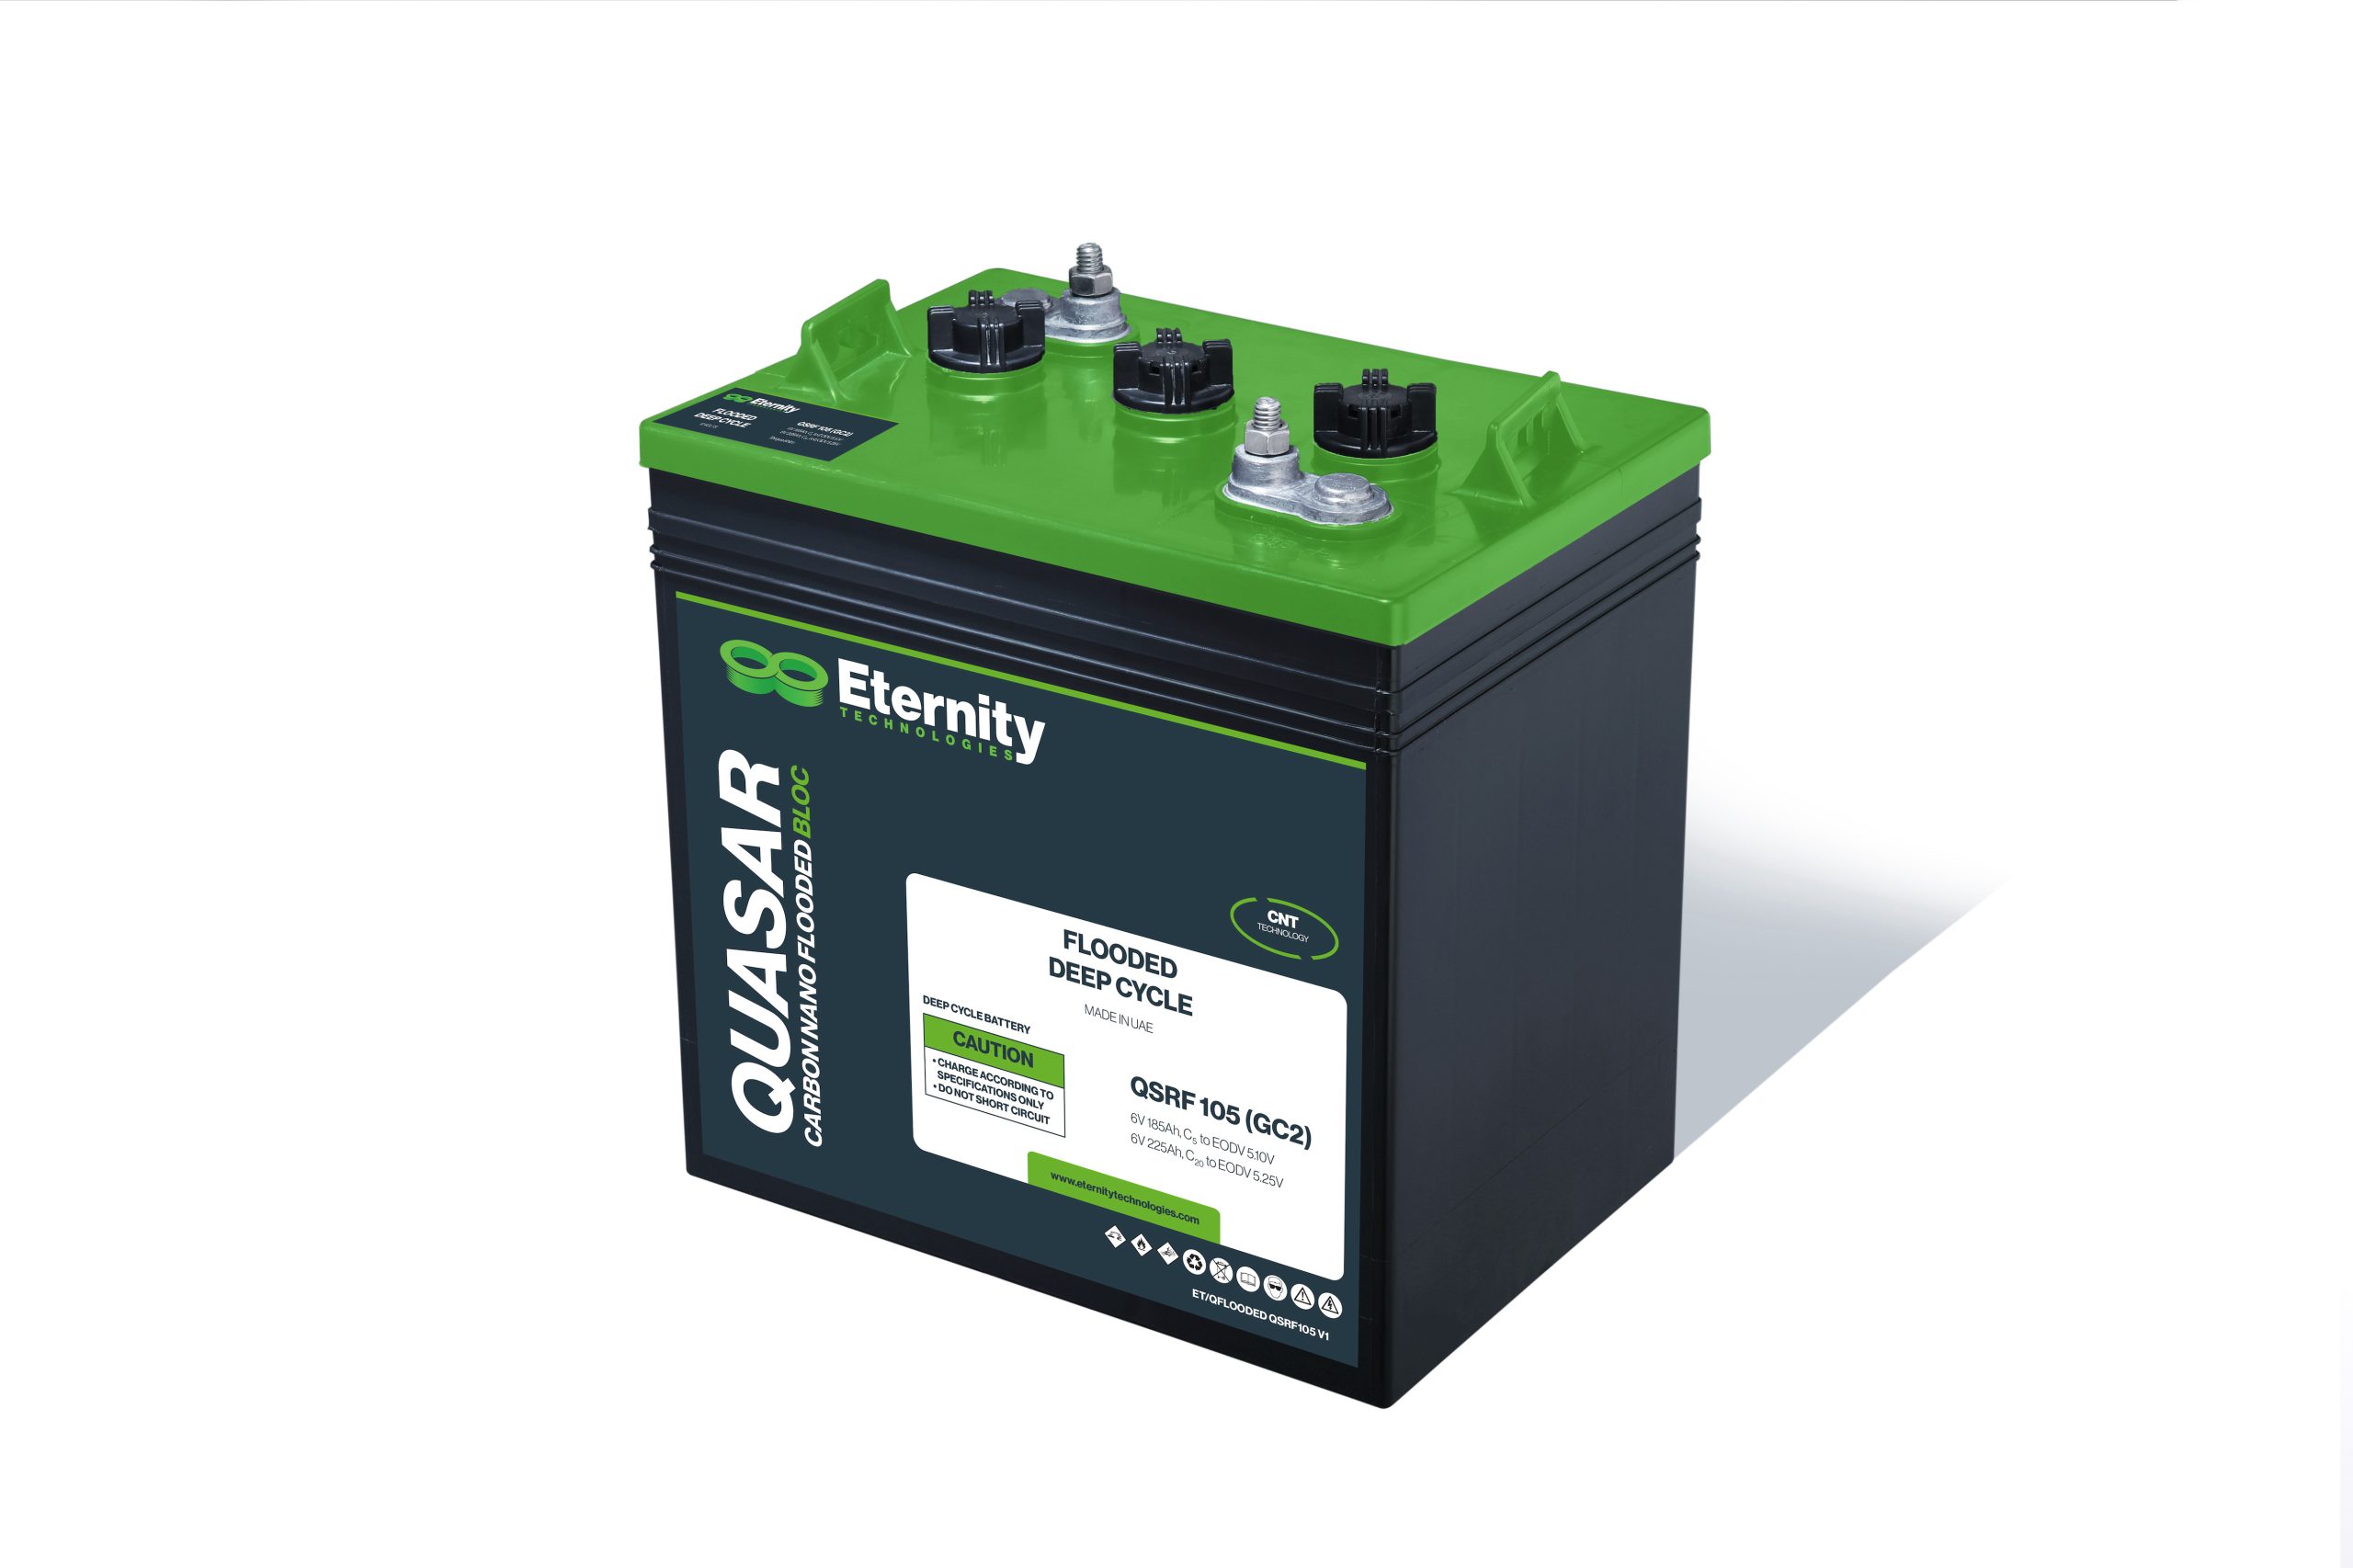 Eternity Technologies Unveils Cutting-Edge QUASAR Carbon Nano Flooded Deep Cycle Bloc Battery, expanding their premium range